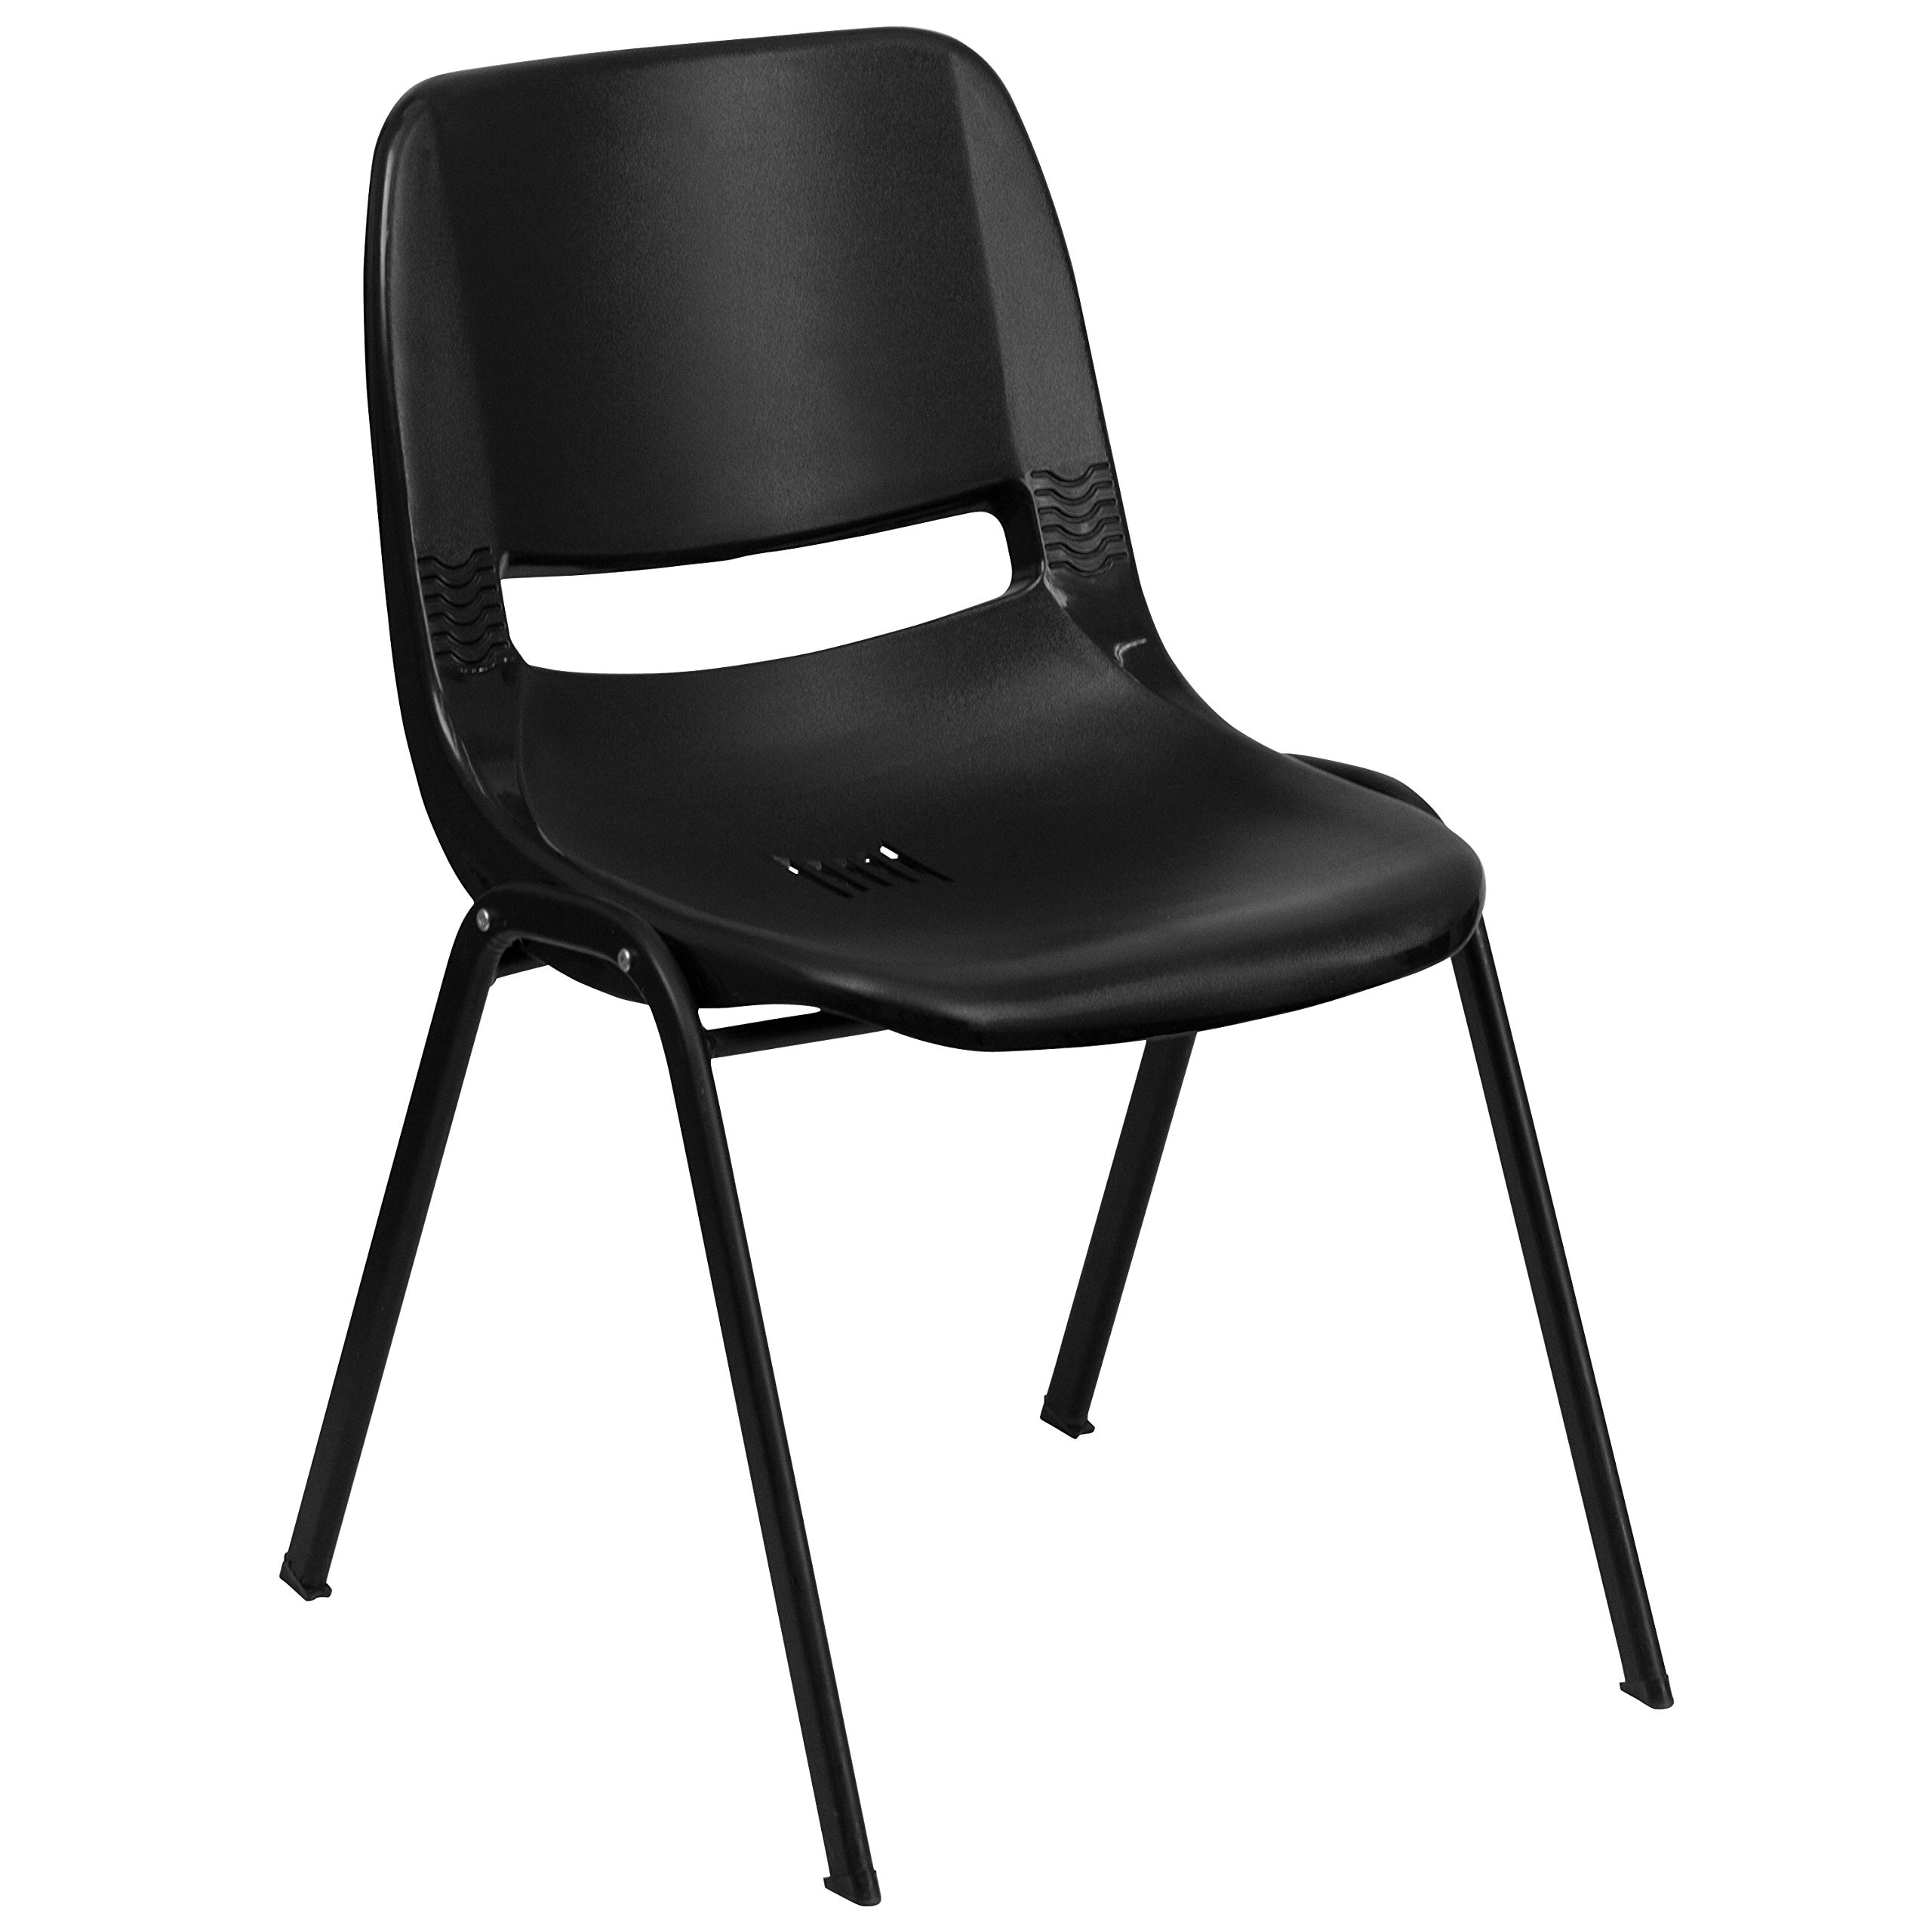 EMMA + OLIVER Kid's Black Ergonomic Shell Stack Chair - Black Frame and 12" H Seat